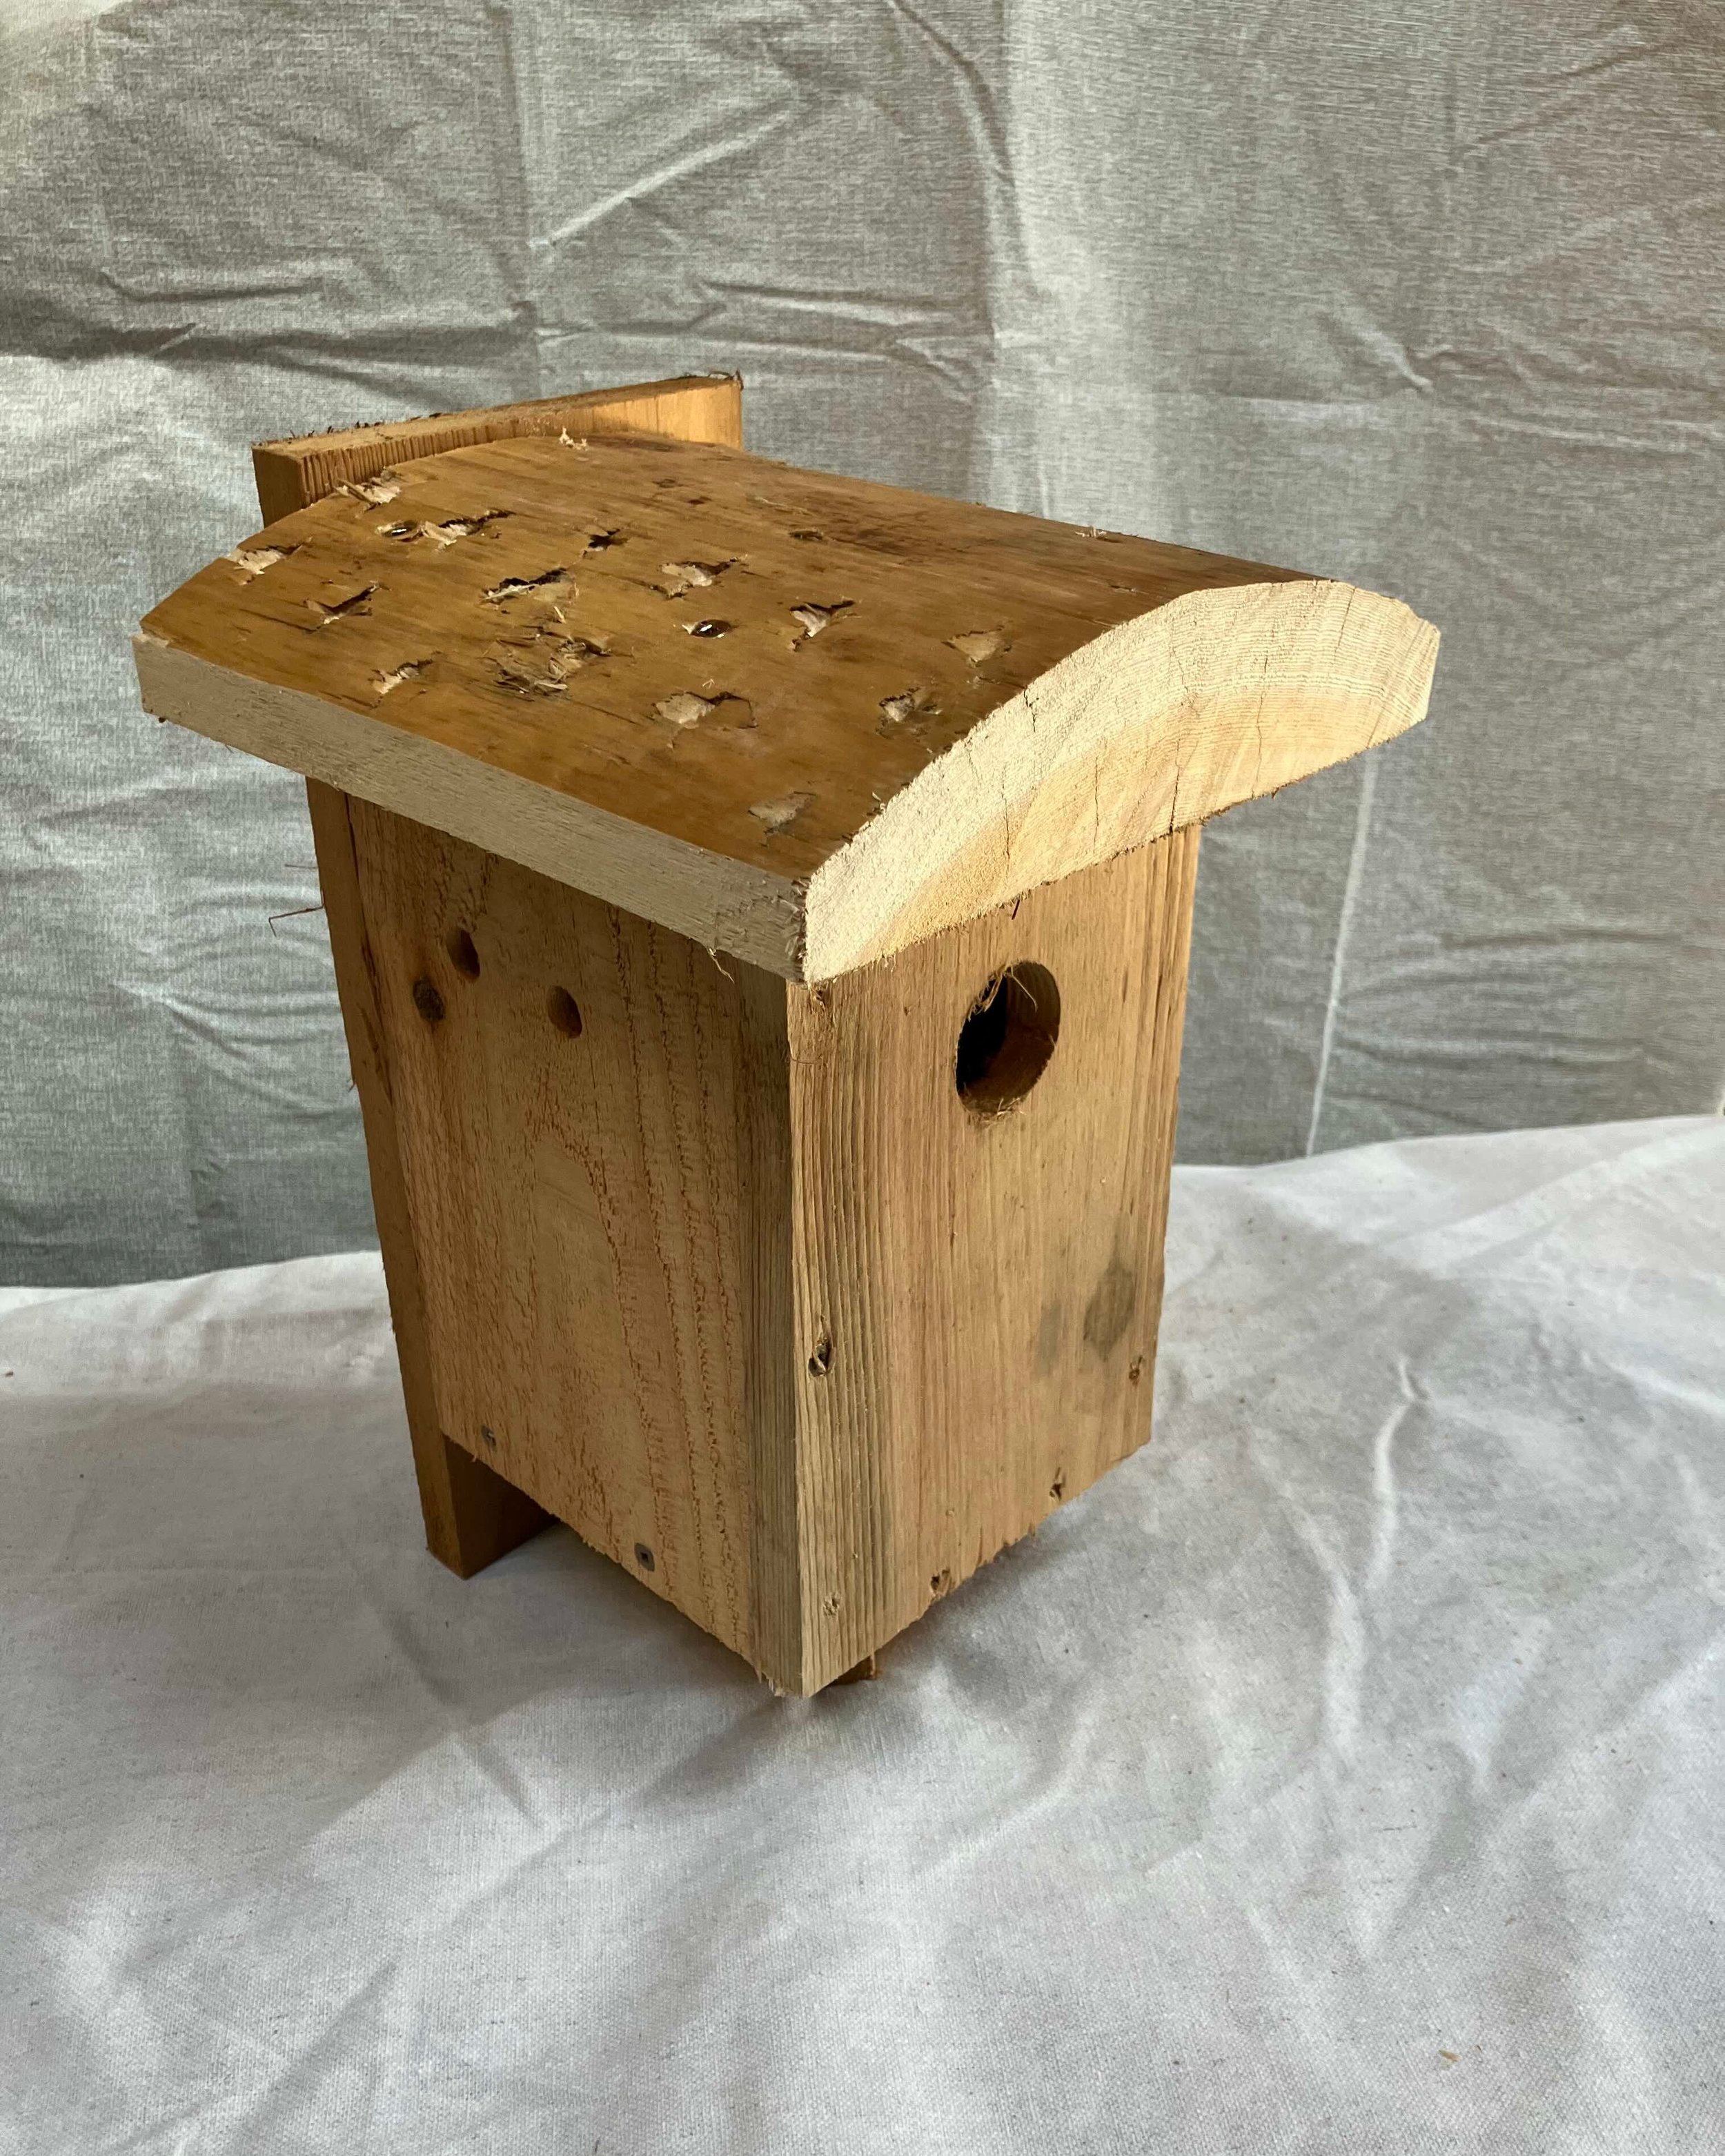 Cedar Nest Box - $35